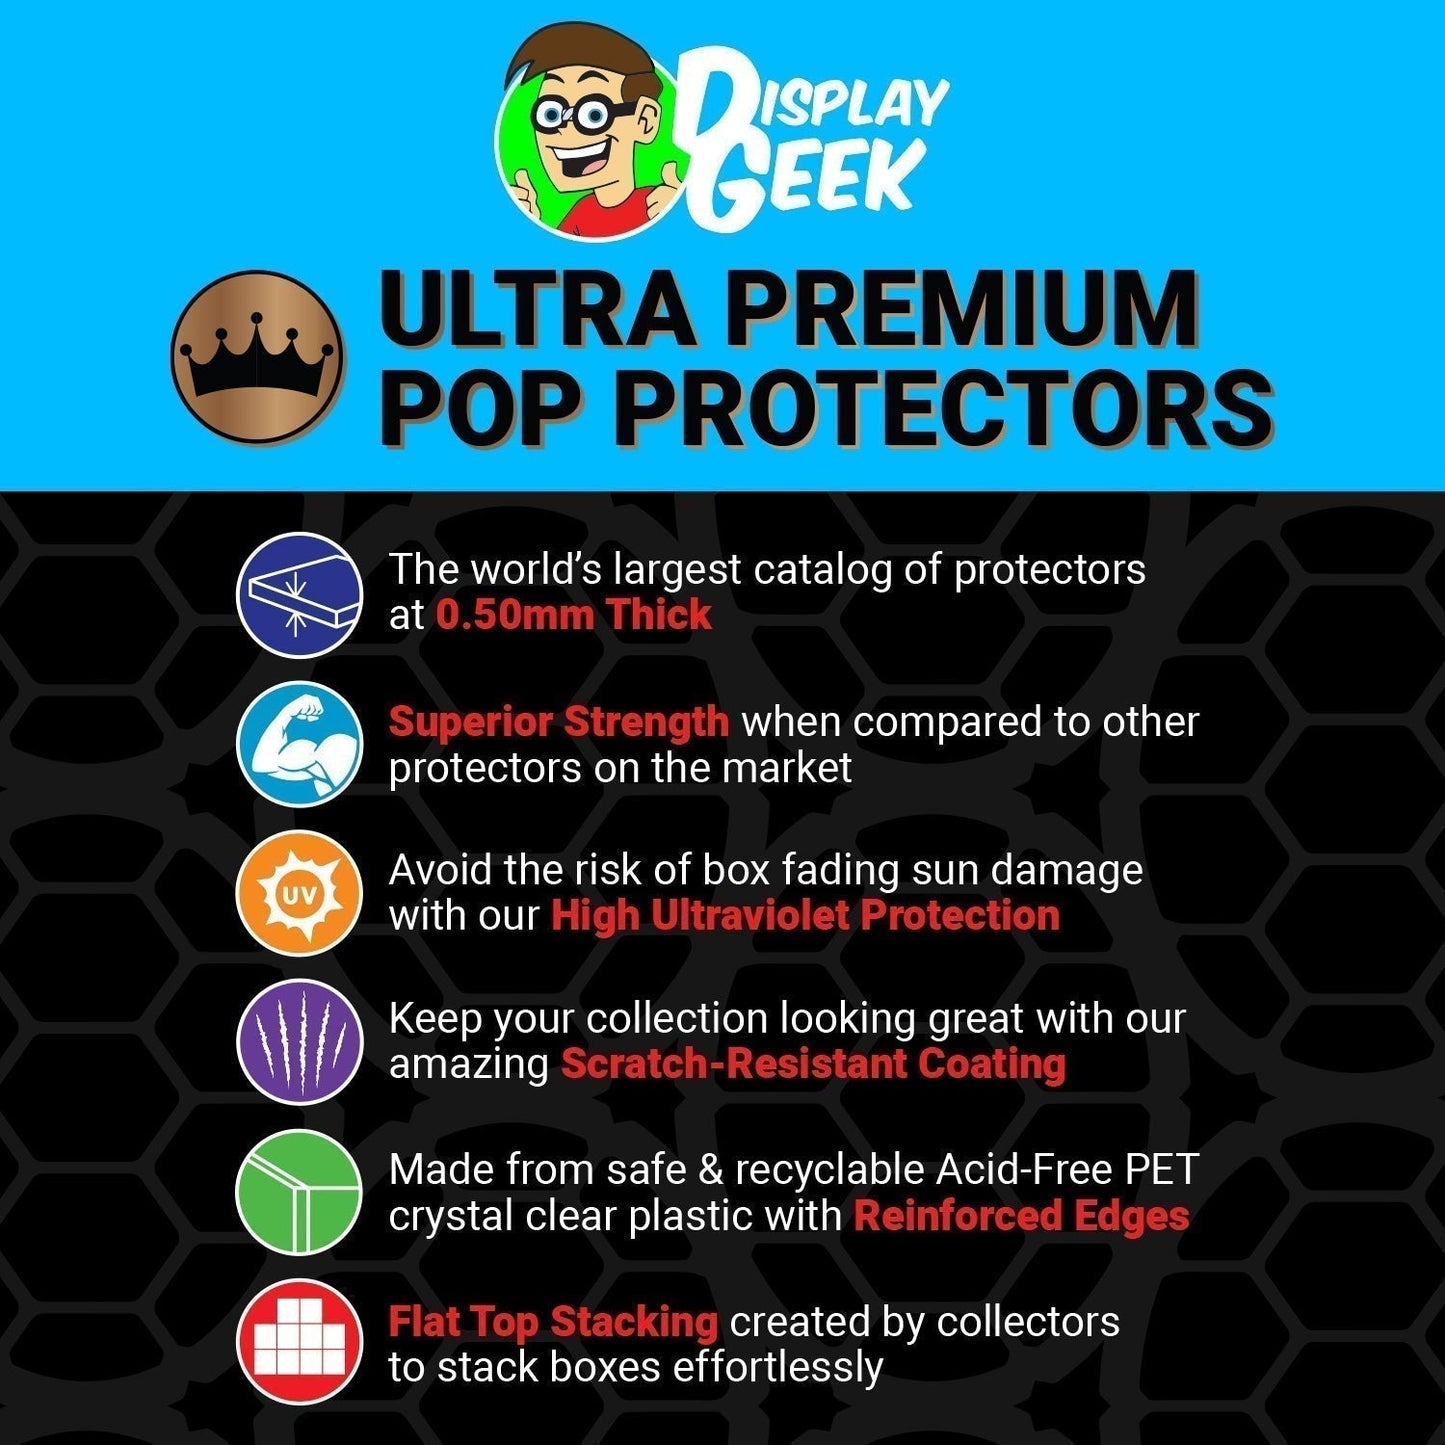 Pop Protector for 2 Pack Santa Jack & Christmas Sally Diamond Funko Pop on The Protector Guide App by Display Geek